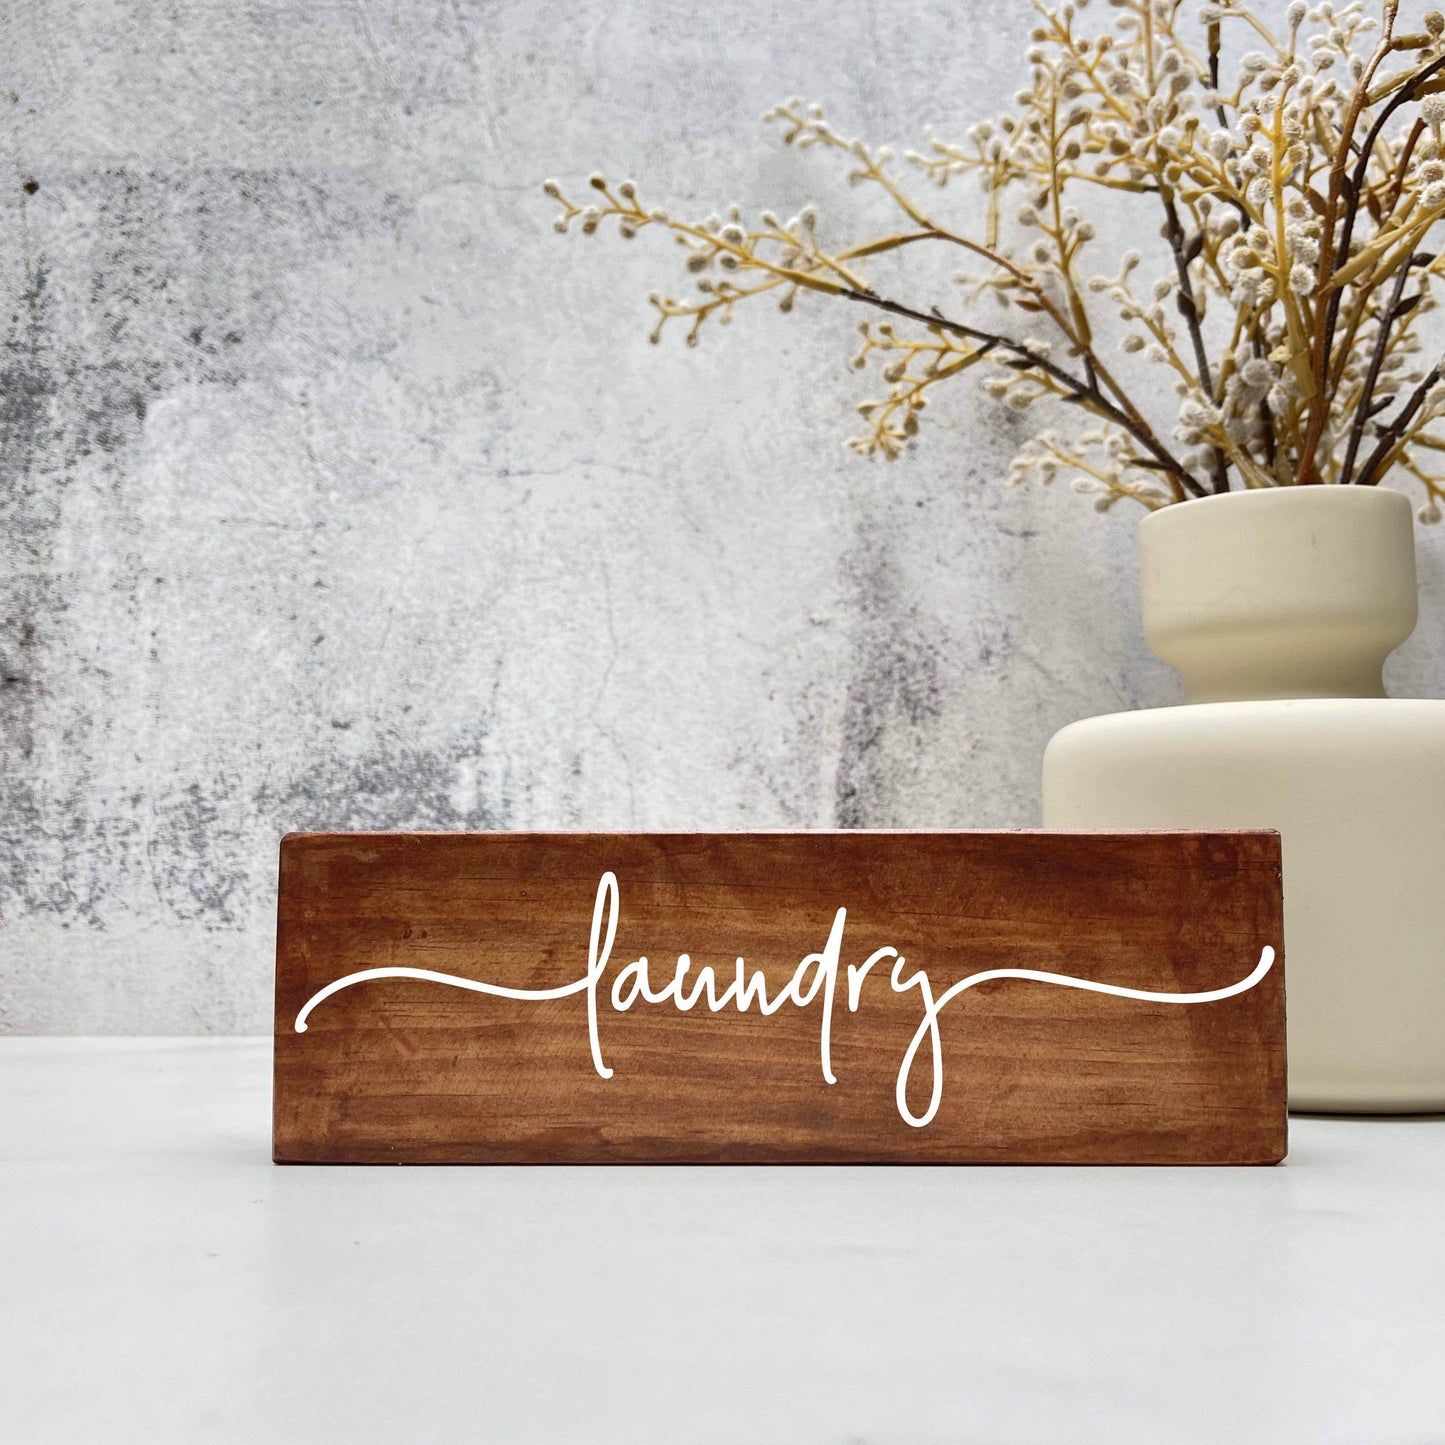 Laundry, laundry wood sign, laundry decor, home decor